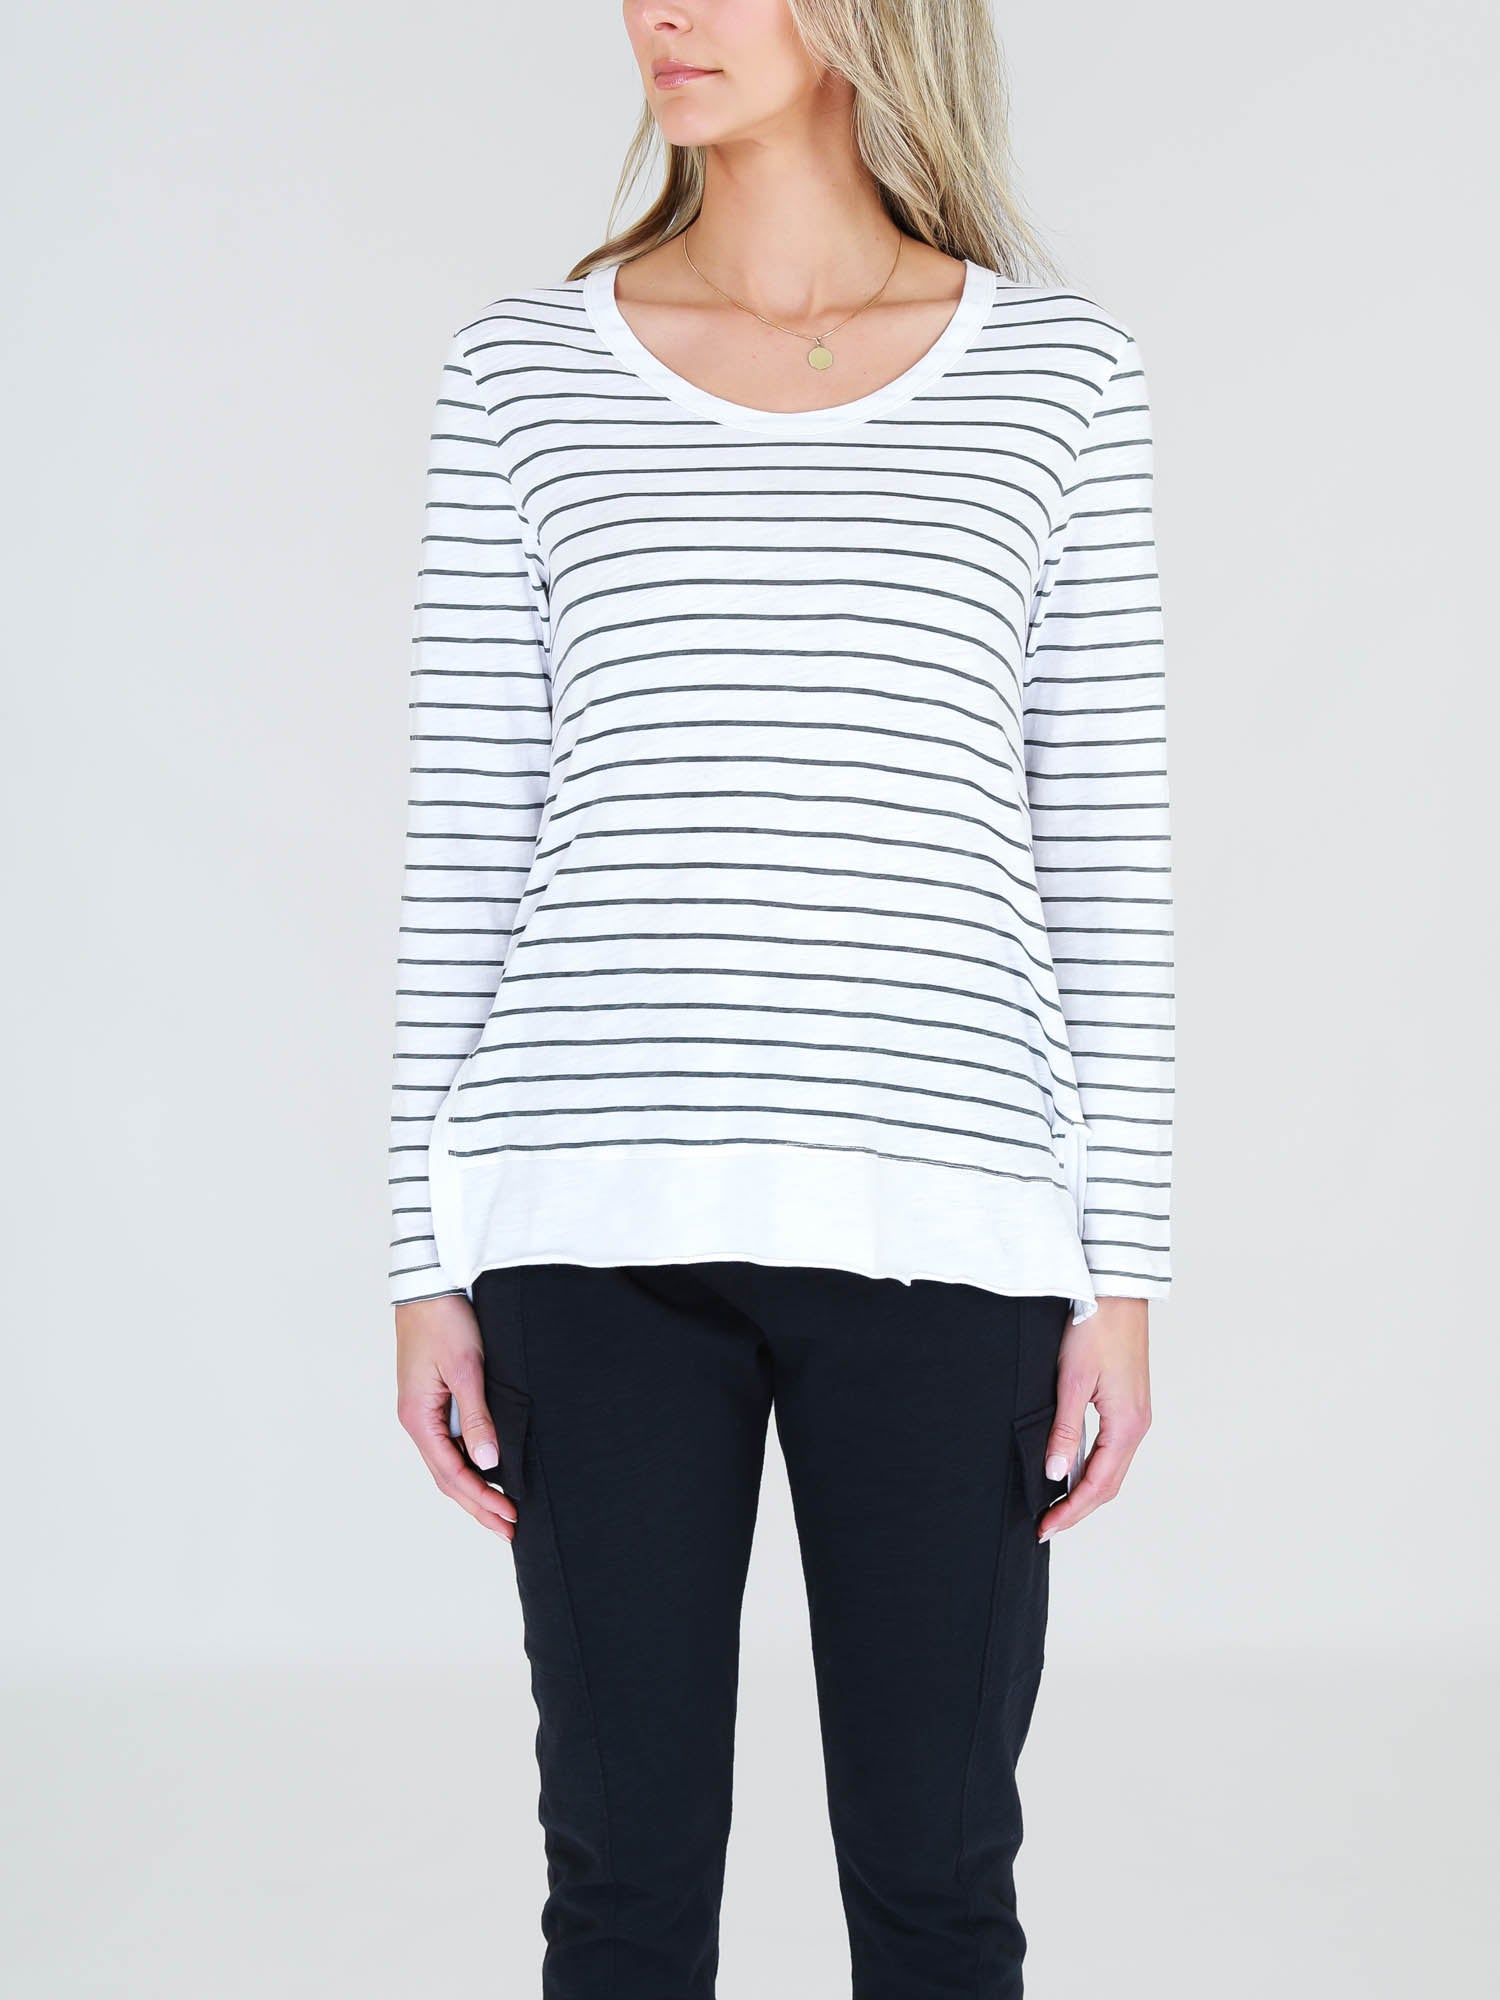 black and white striped shirt #color_stripe